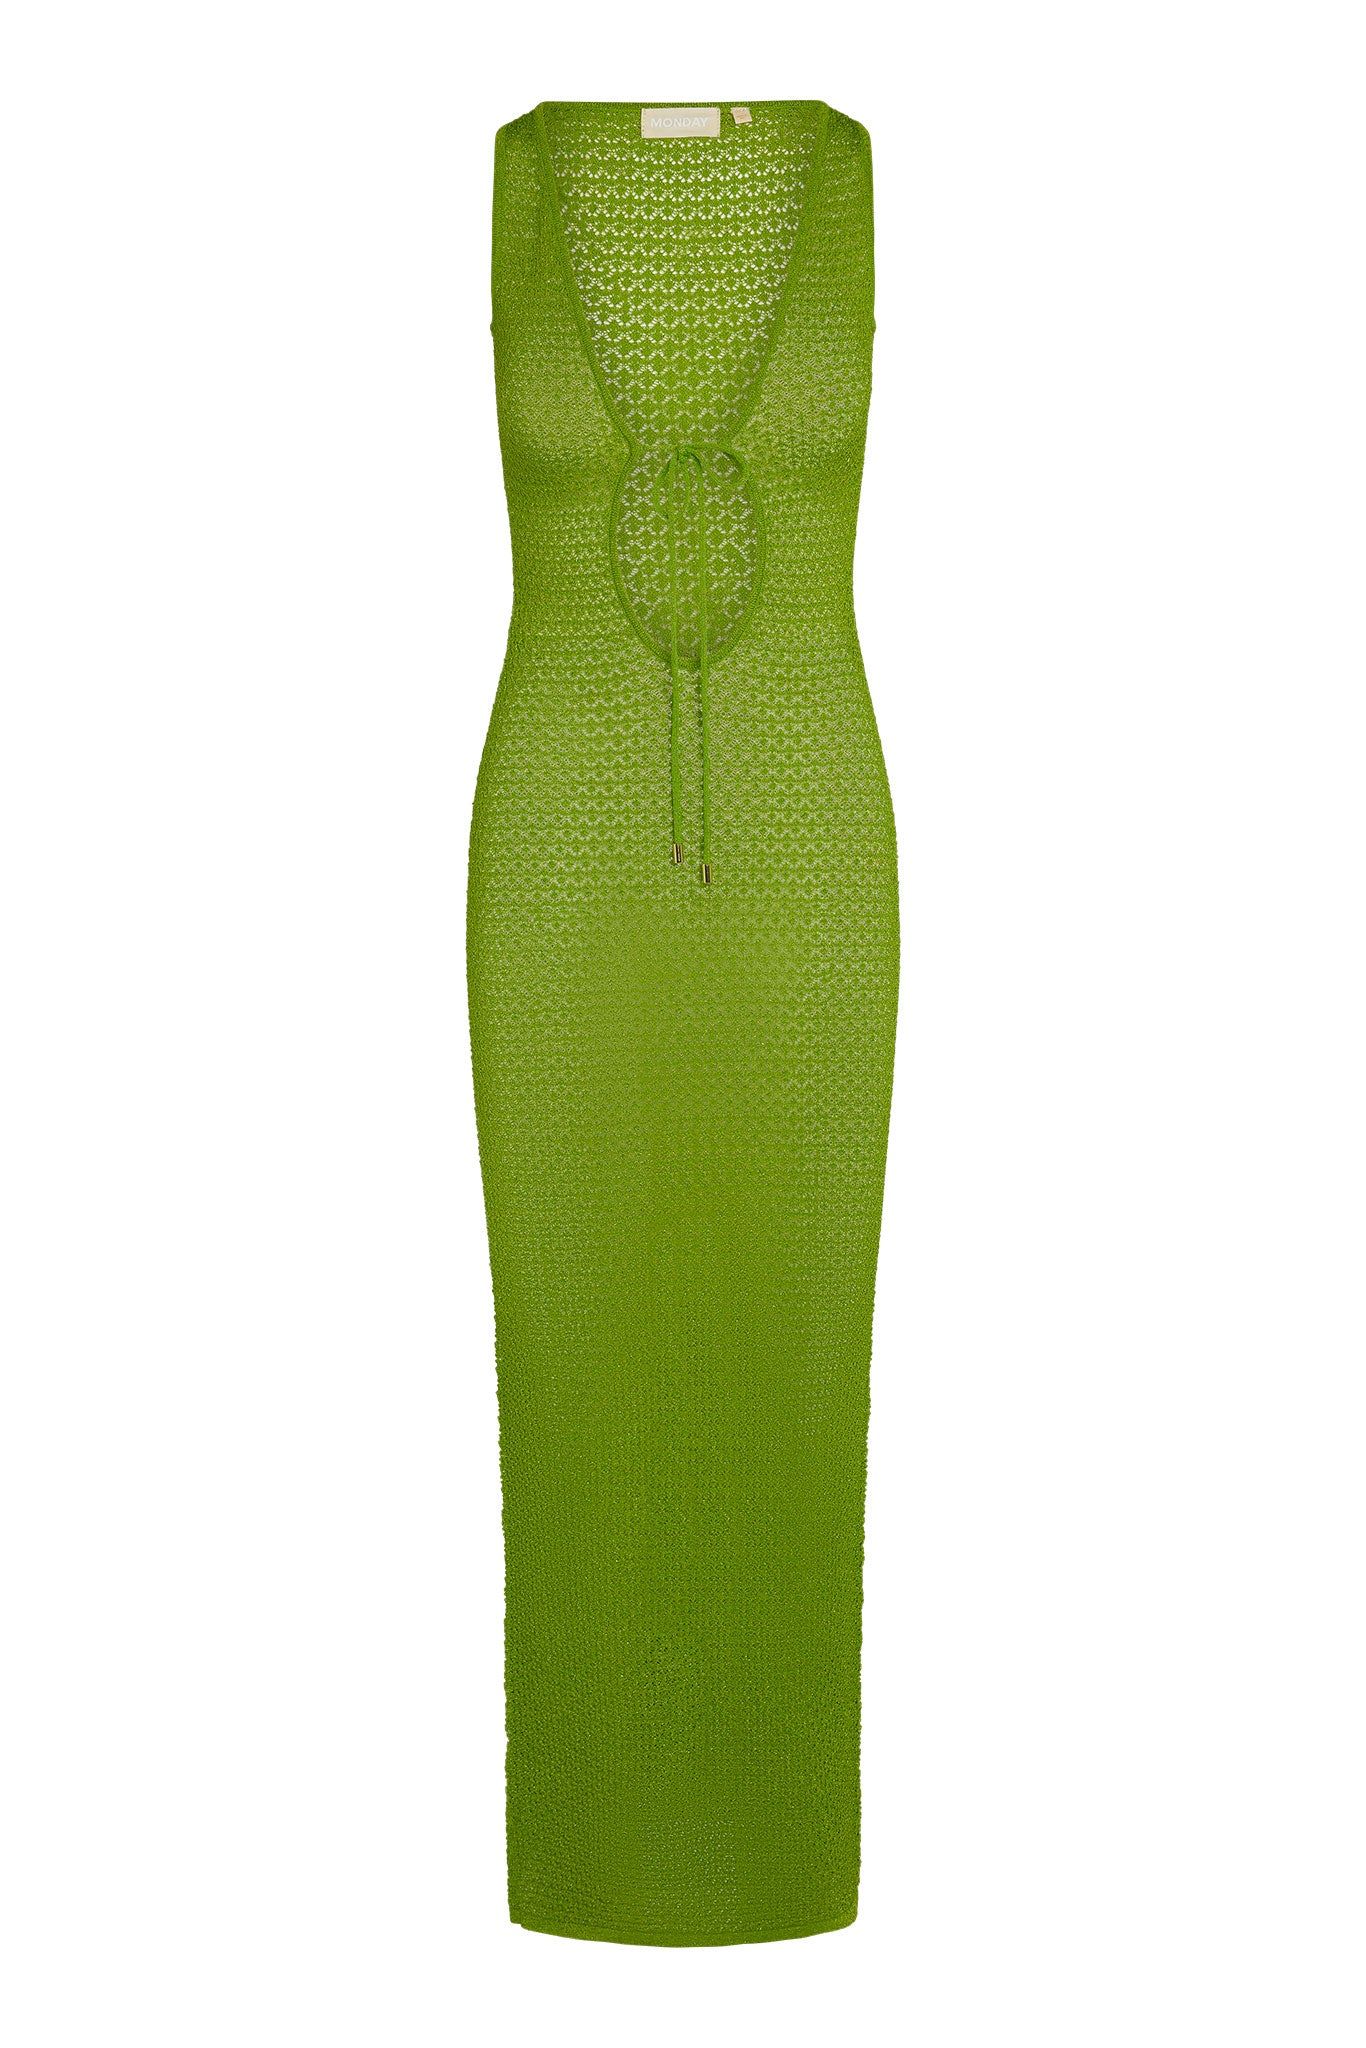 Monte Carlo Tie Dress - Cypress Lurex Lace Crochet | Monday Swimwear